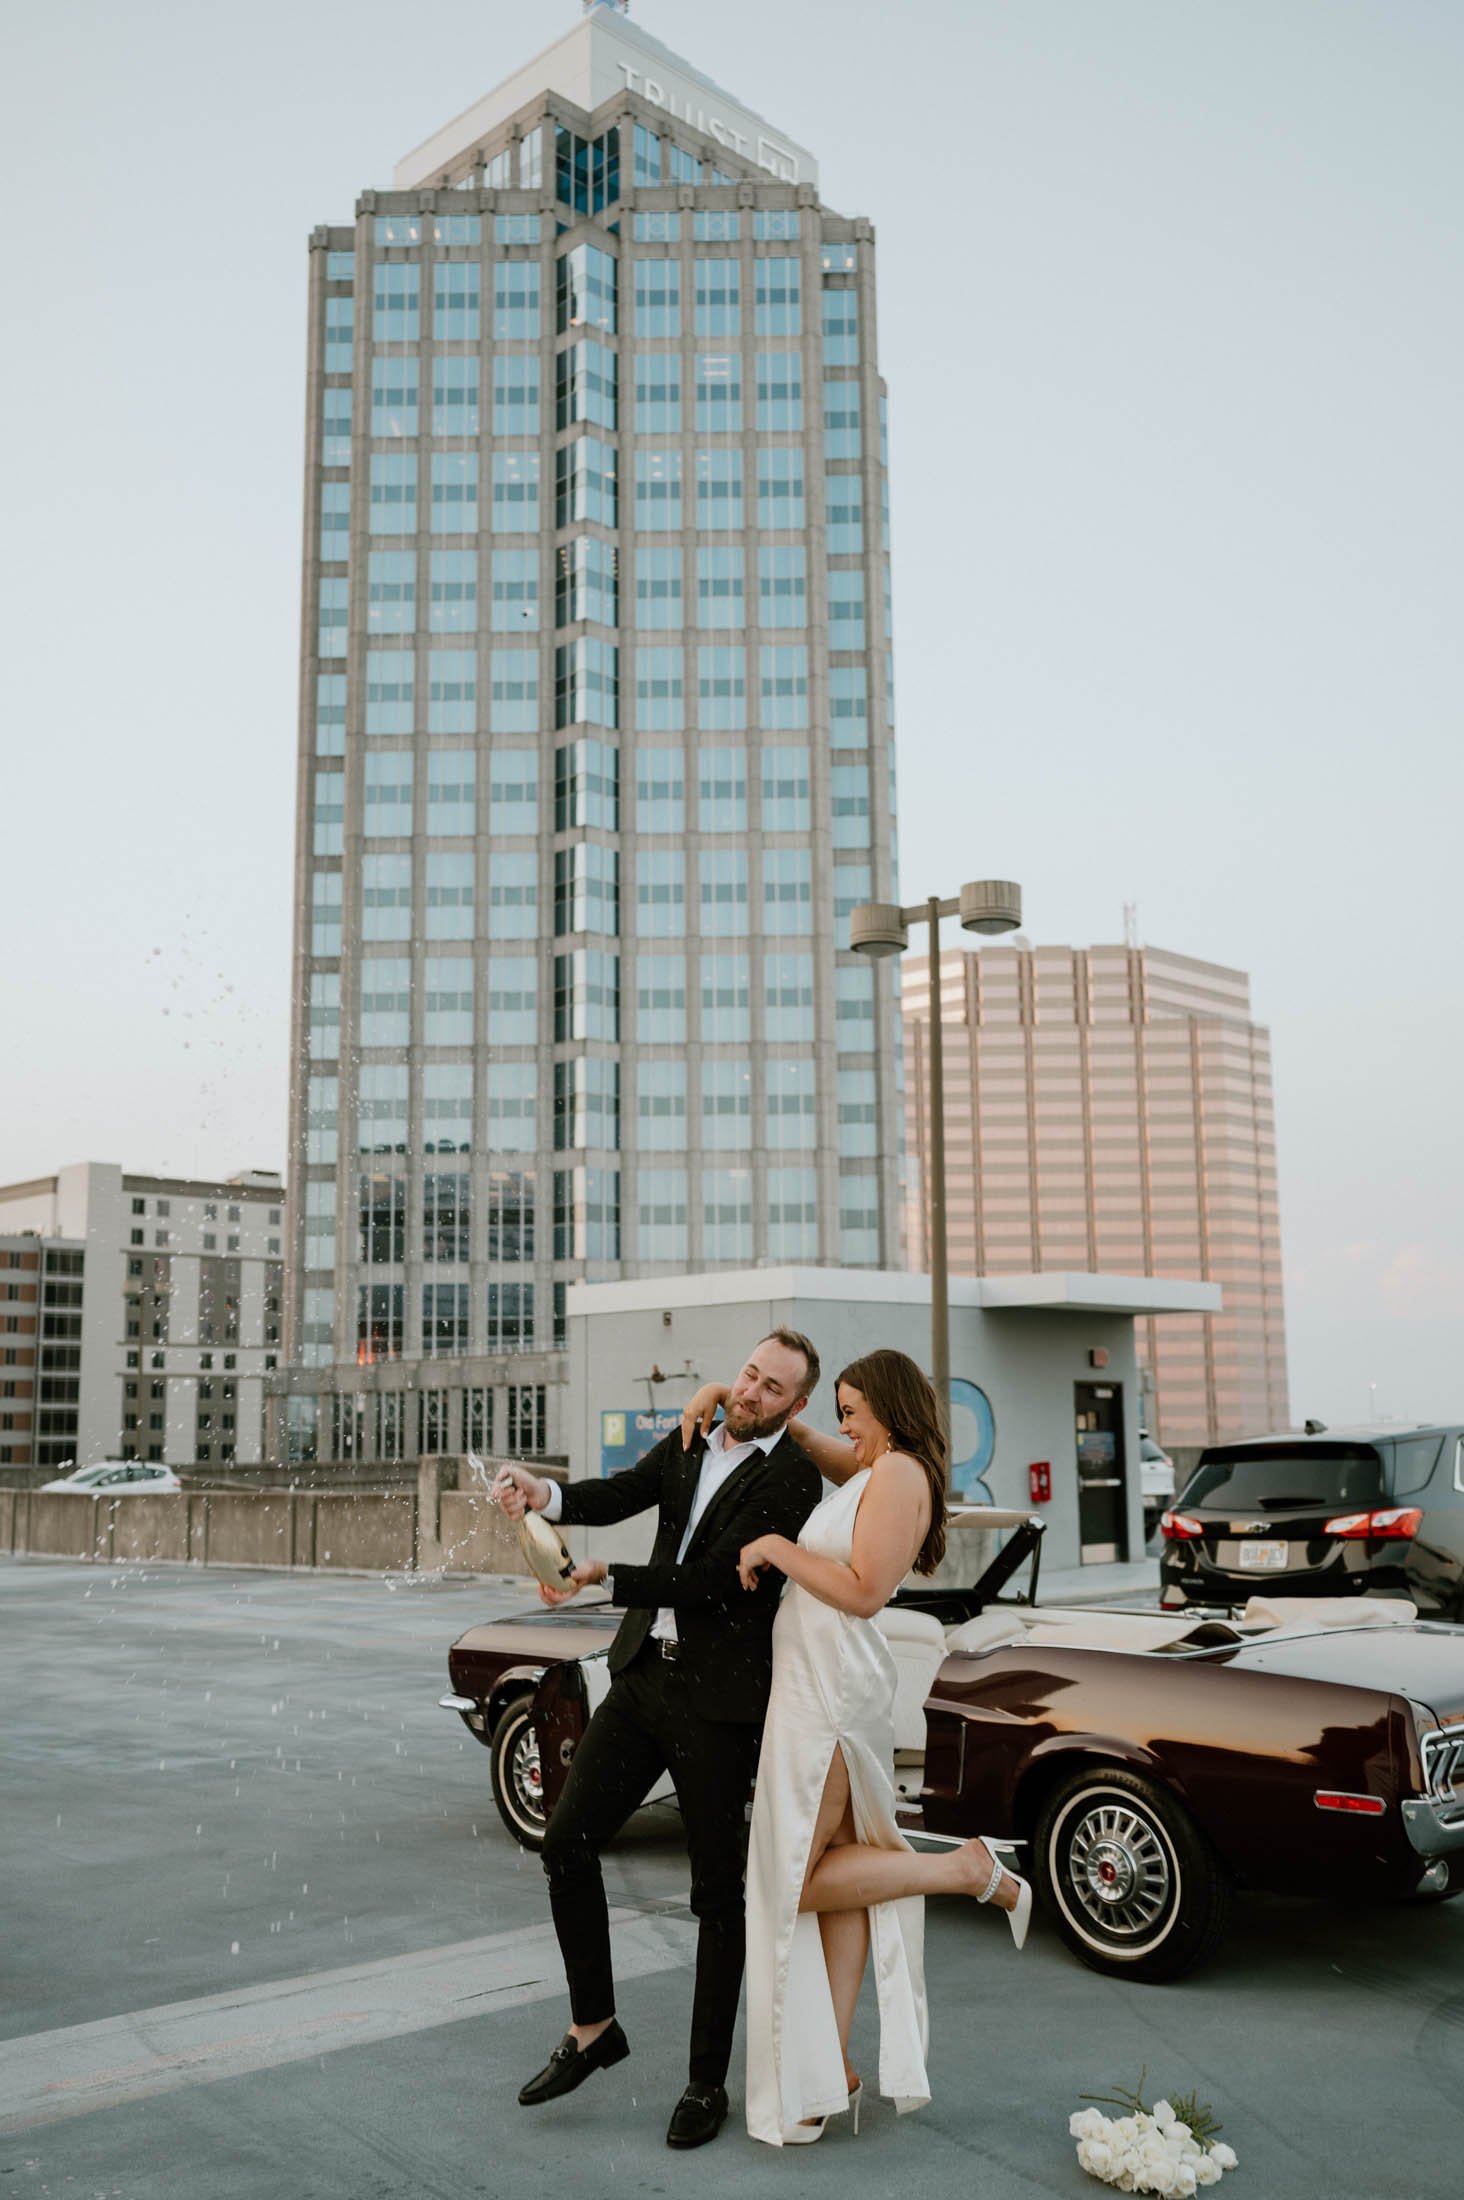 Josie Brooks Photography - Florida luxury wedding photographer rooftop tampa editorial (38 of 55).JPG